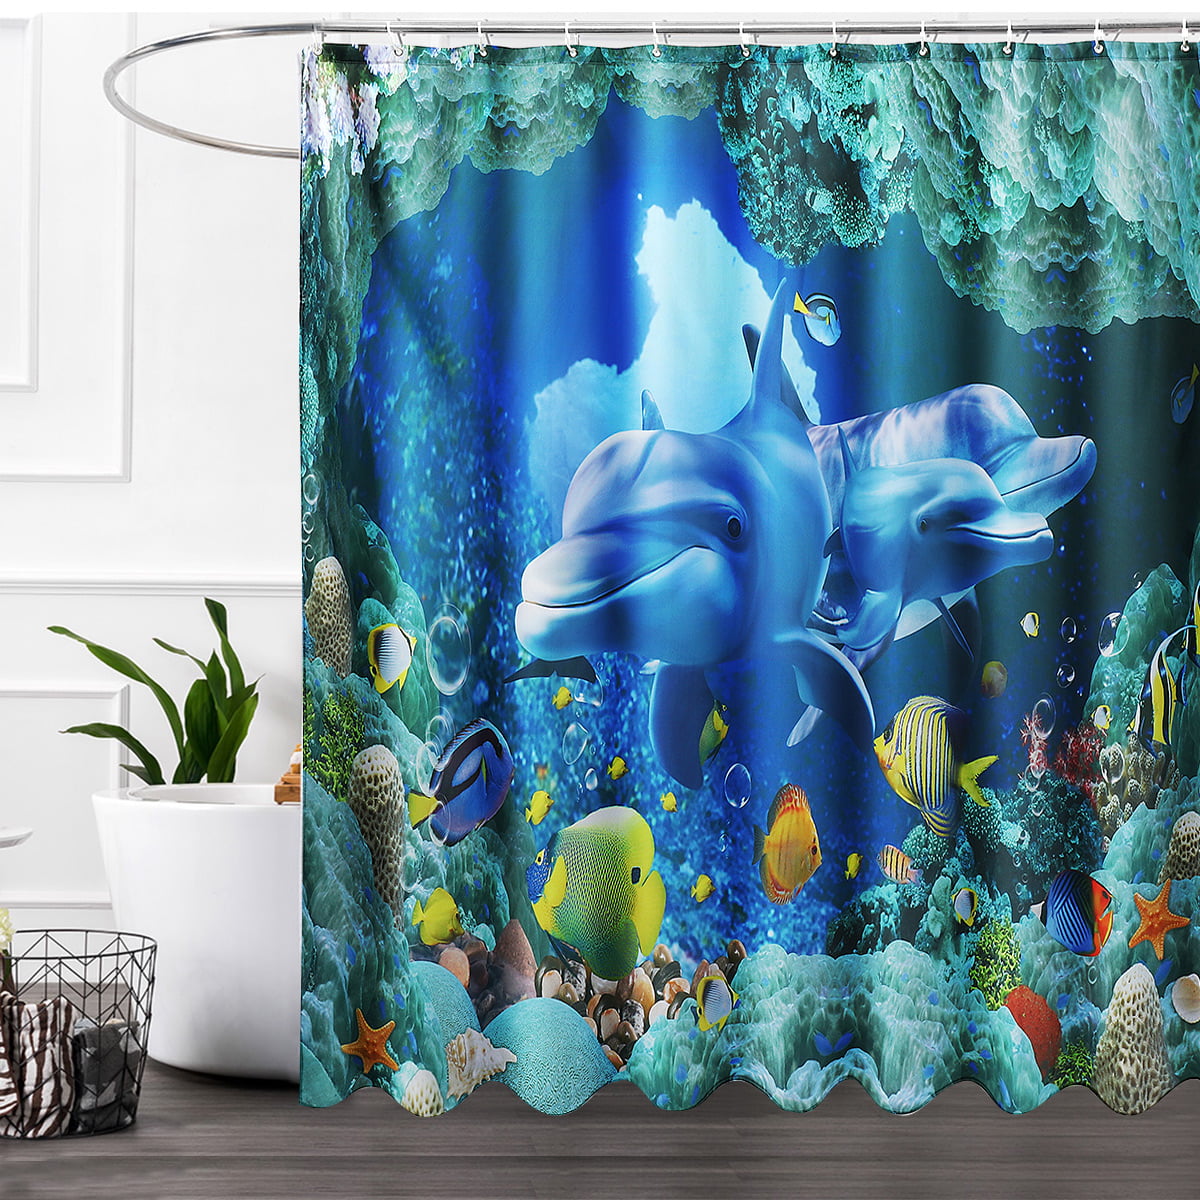 Details about   3D Waterproof Seabed Design Bathroom Shower Curtain Bath Mat Hooks Set  UK US1 